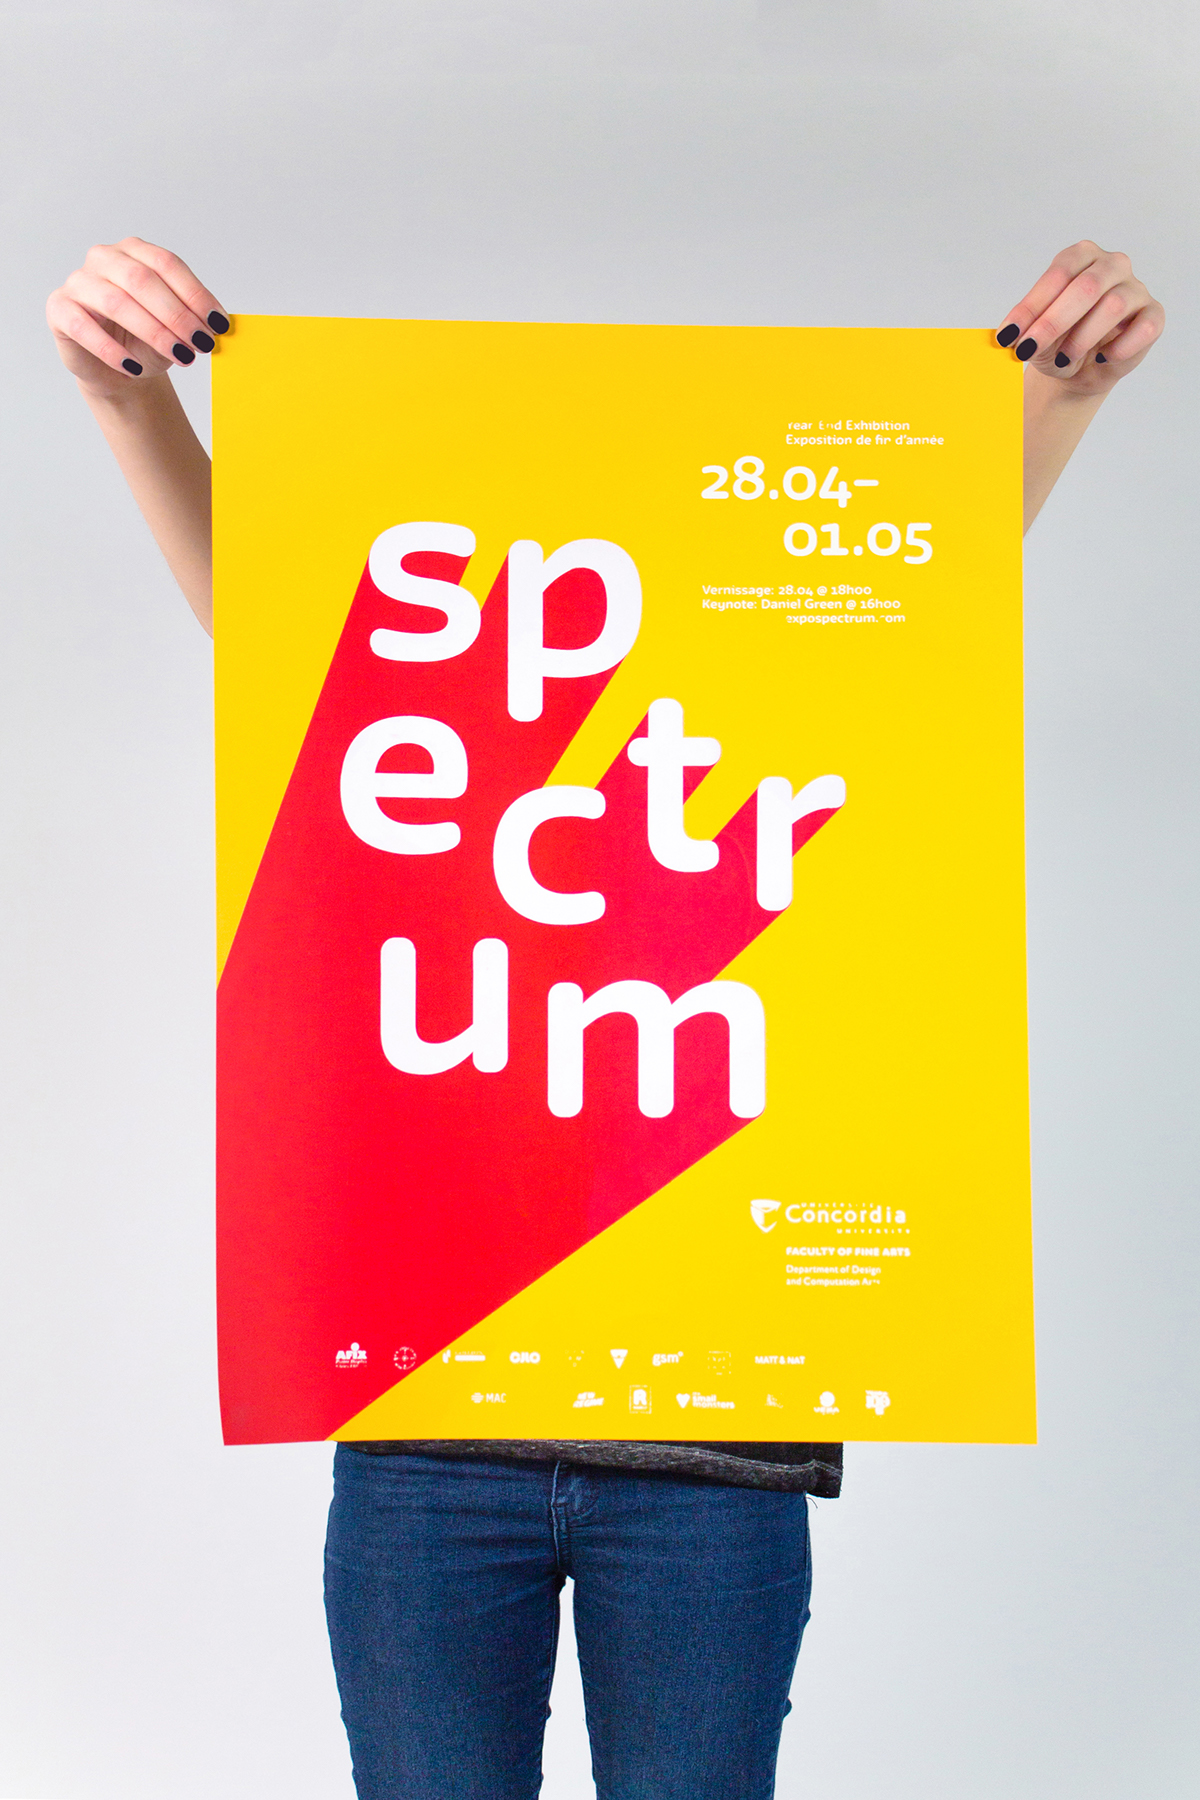 spectrum Catalogue catalog gradient gradients Screenprinting silkscreen book poster print Colourful  pins totes Exhibition 